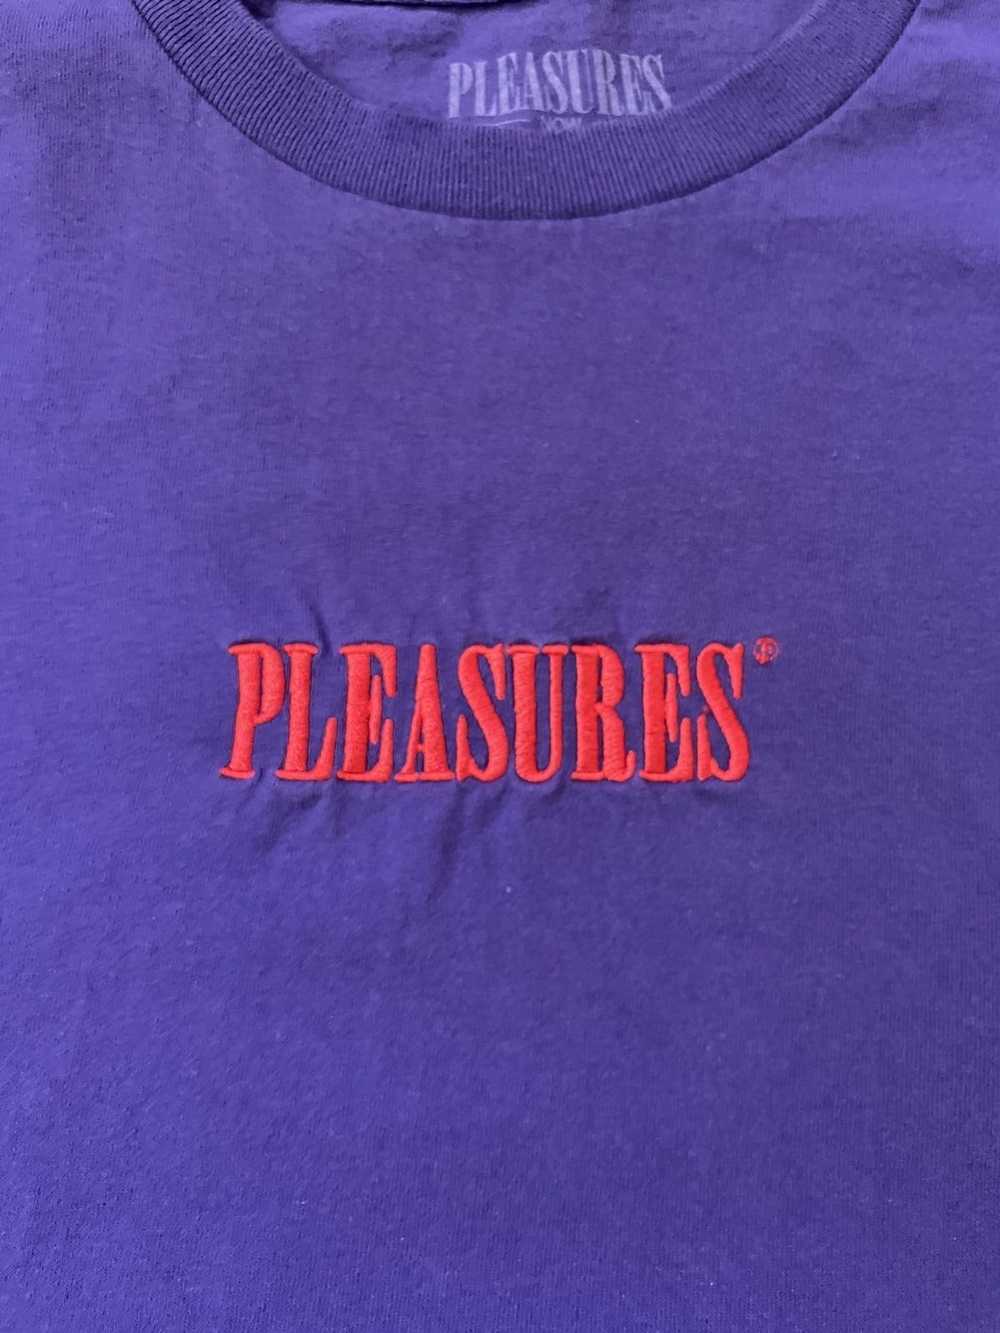 Pleasures Pleasures tee - image 2